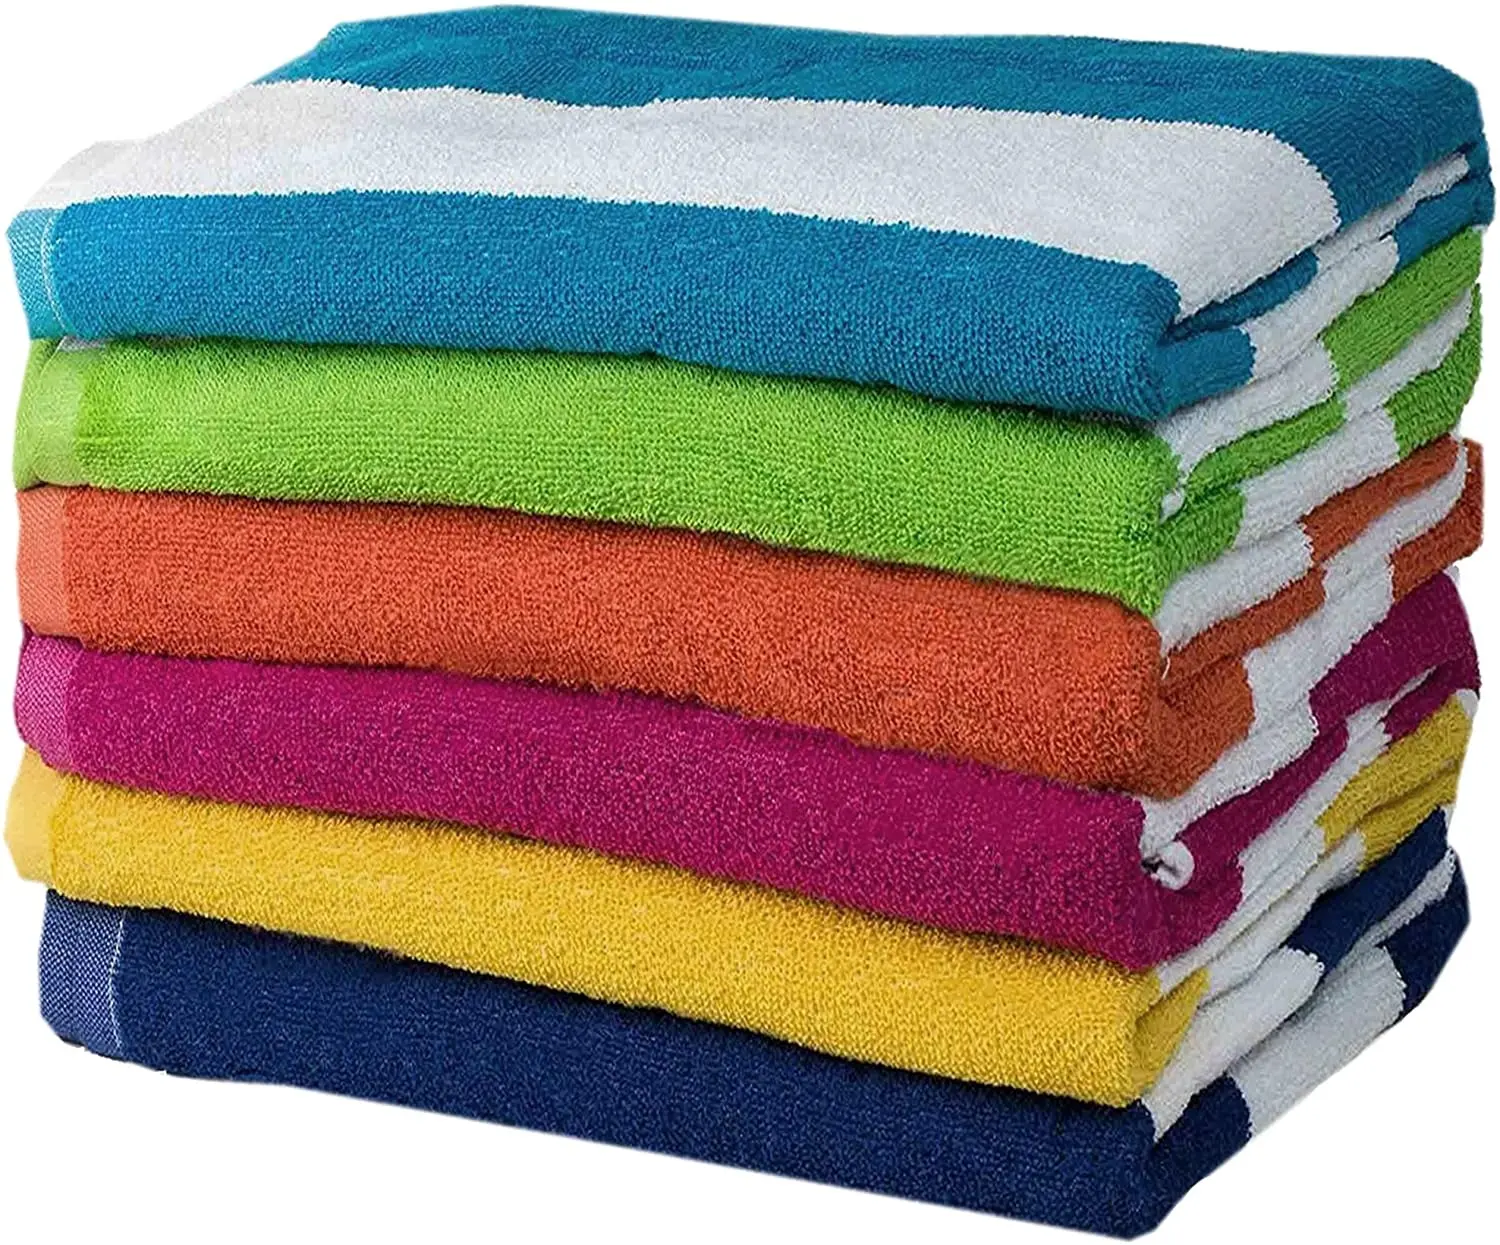 100% cotton terry stripe beach towel, pool towel